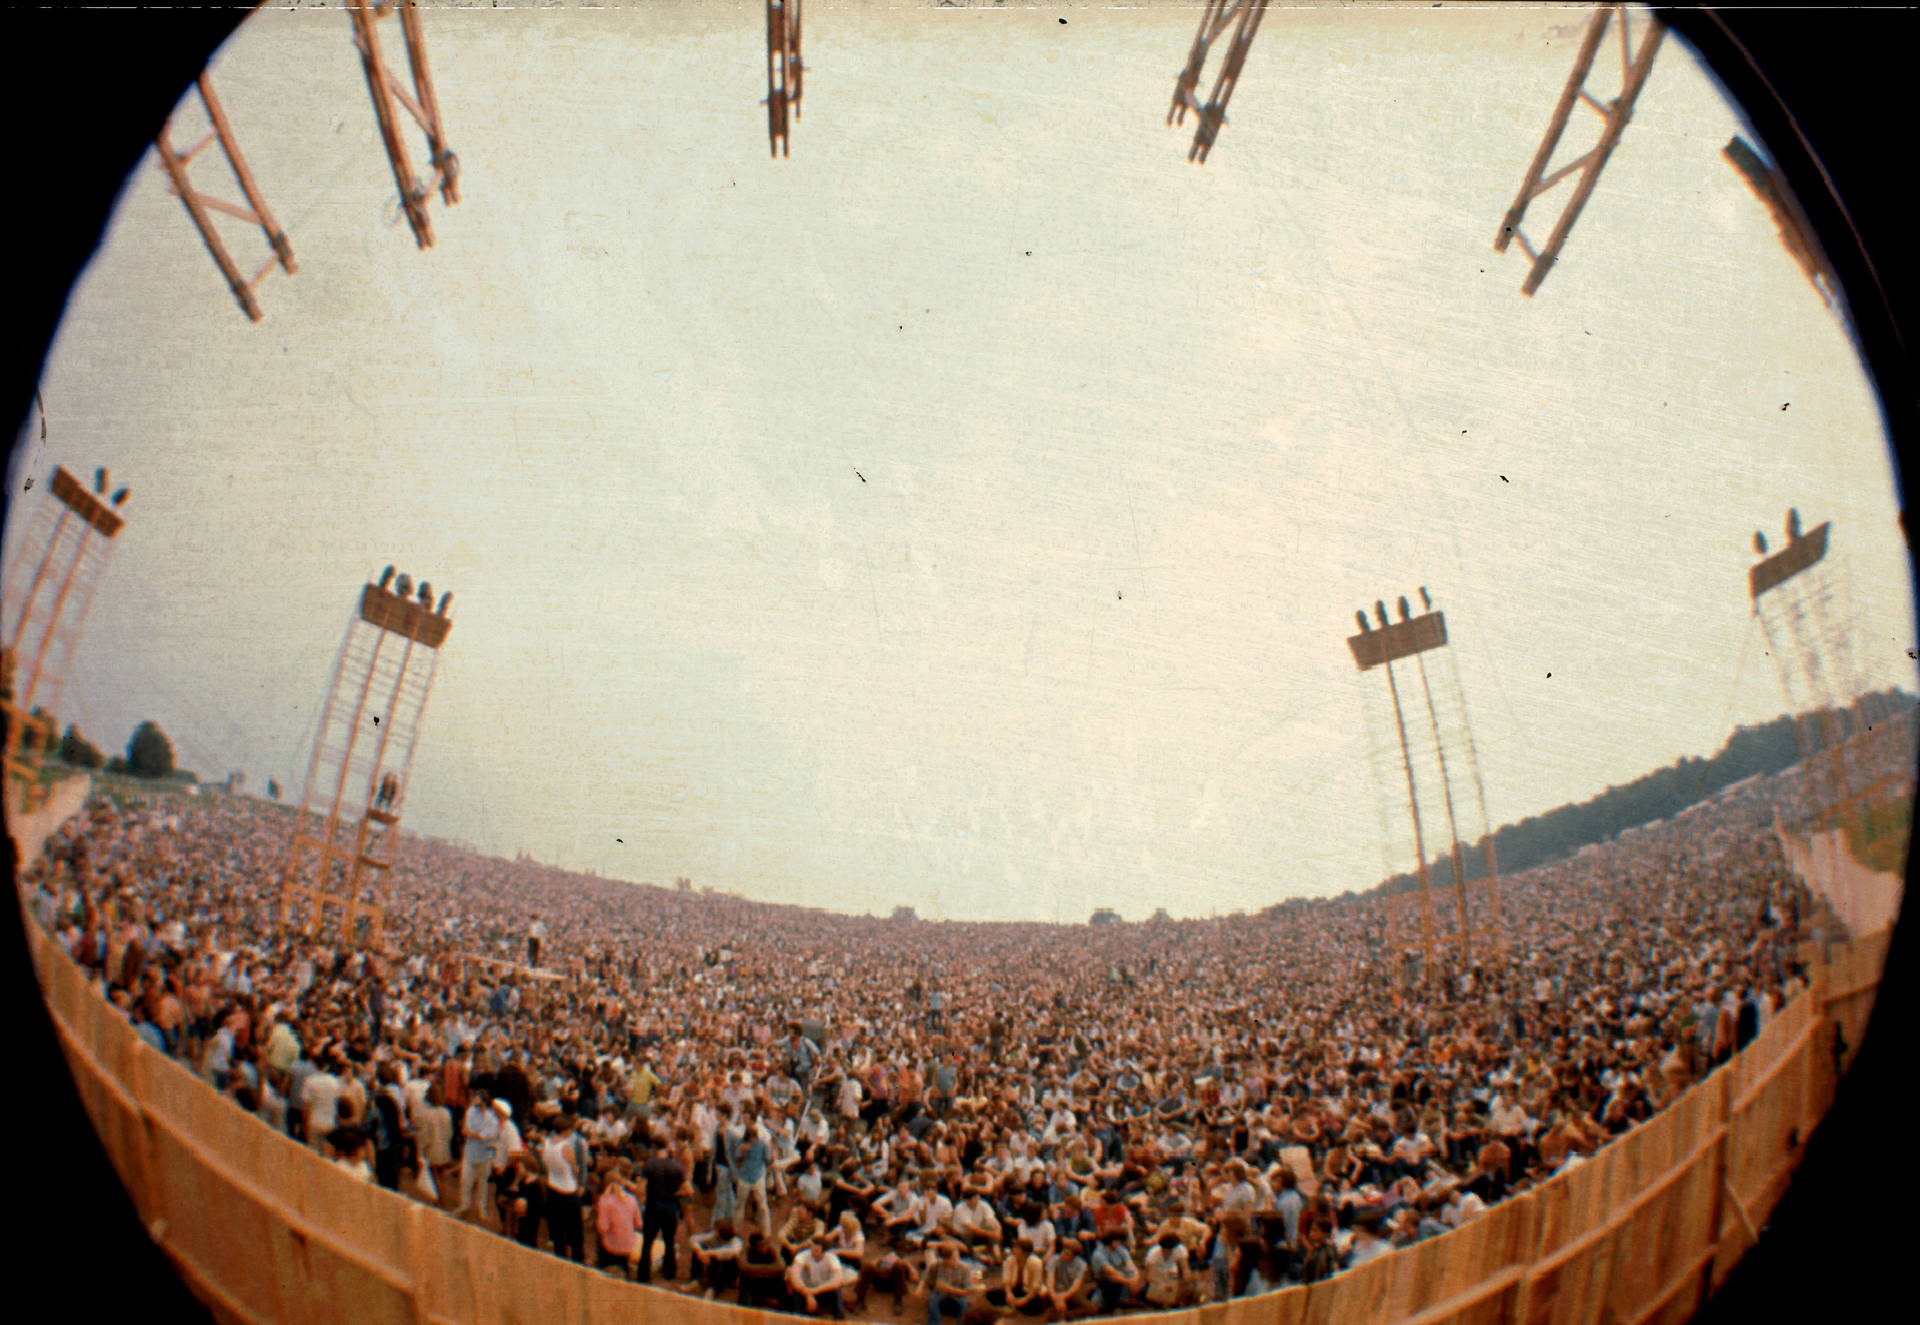 Woodstock Crowd Fish Eye Lens